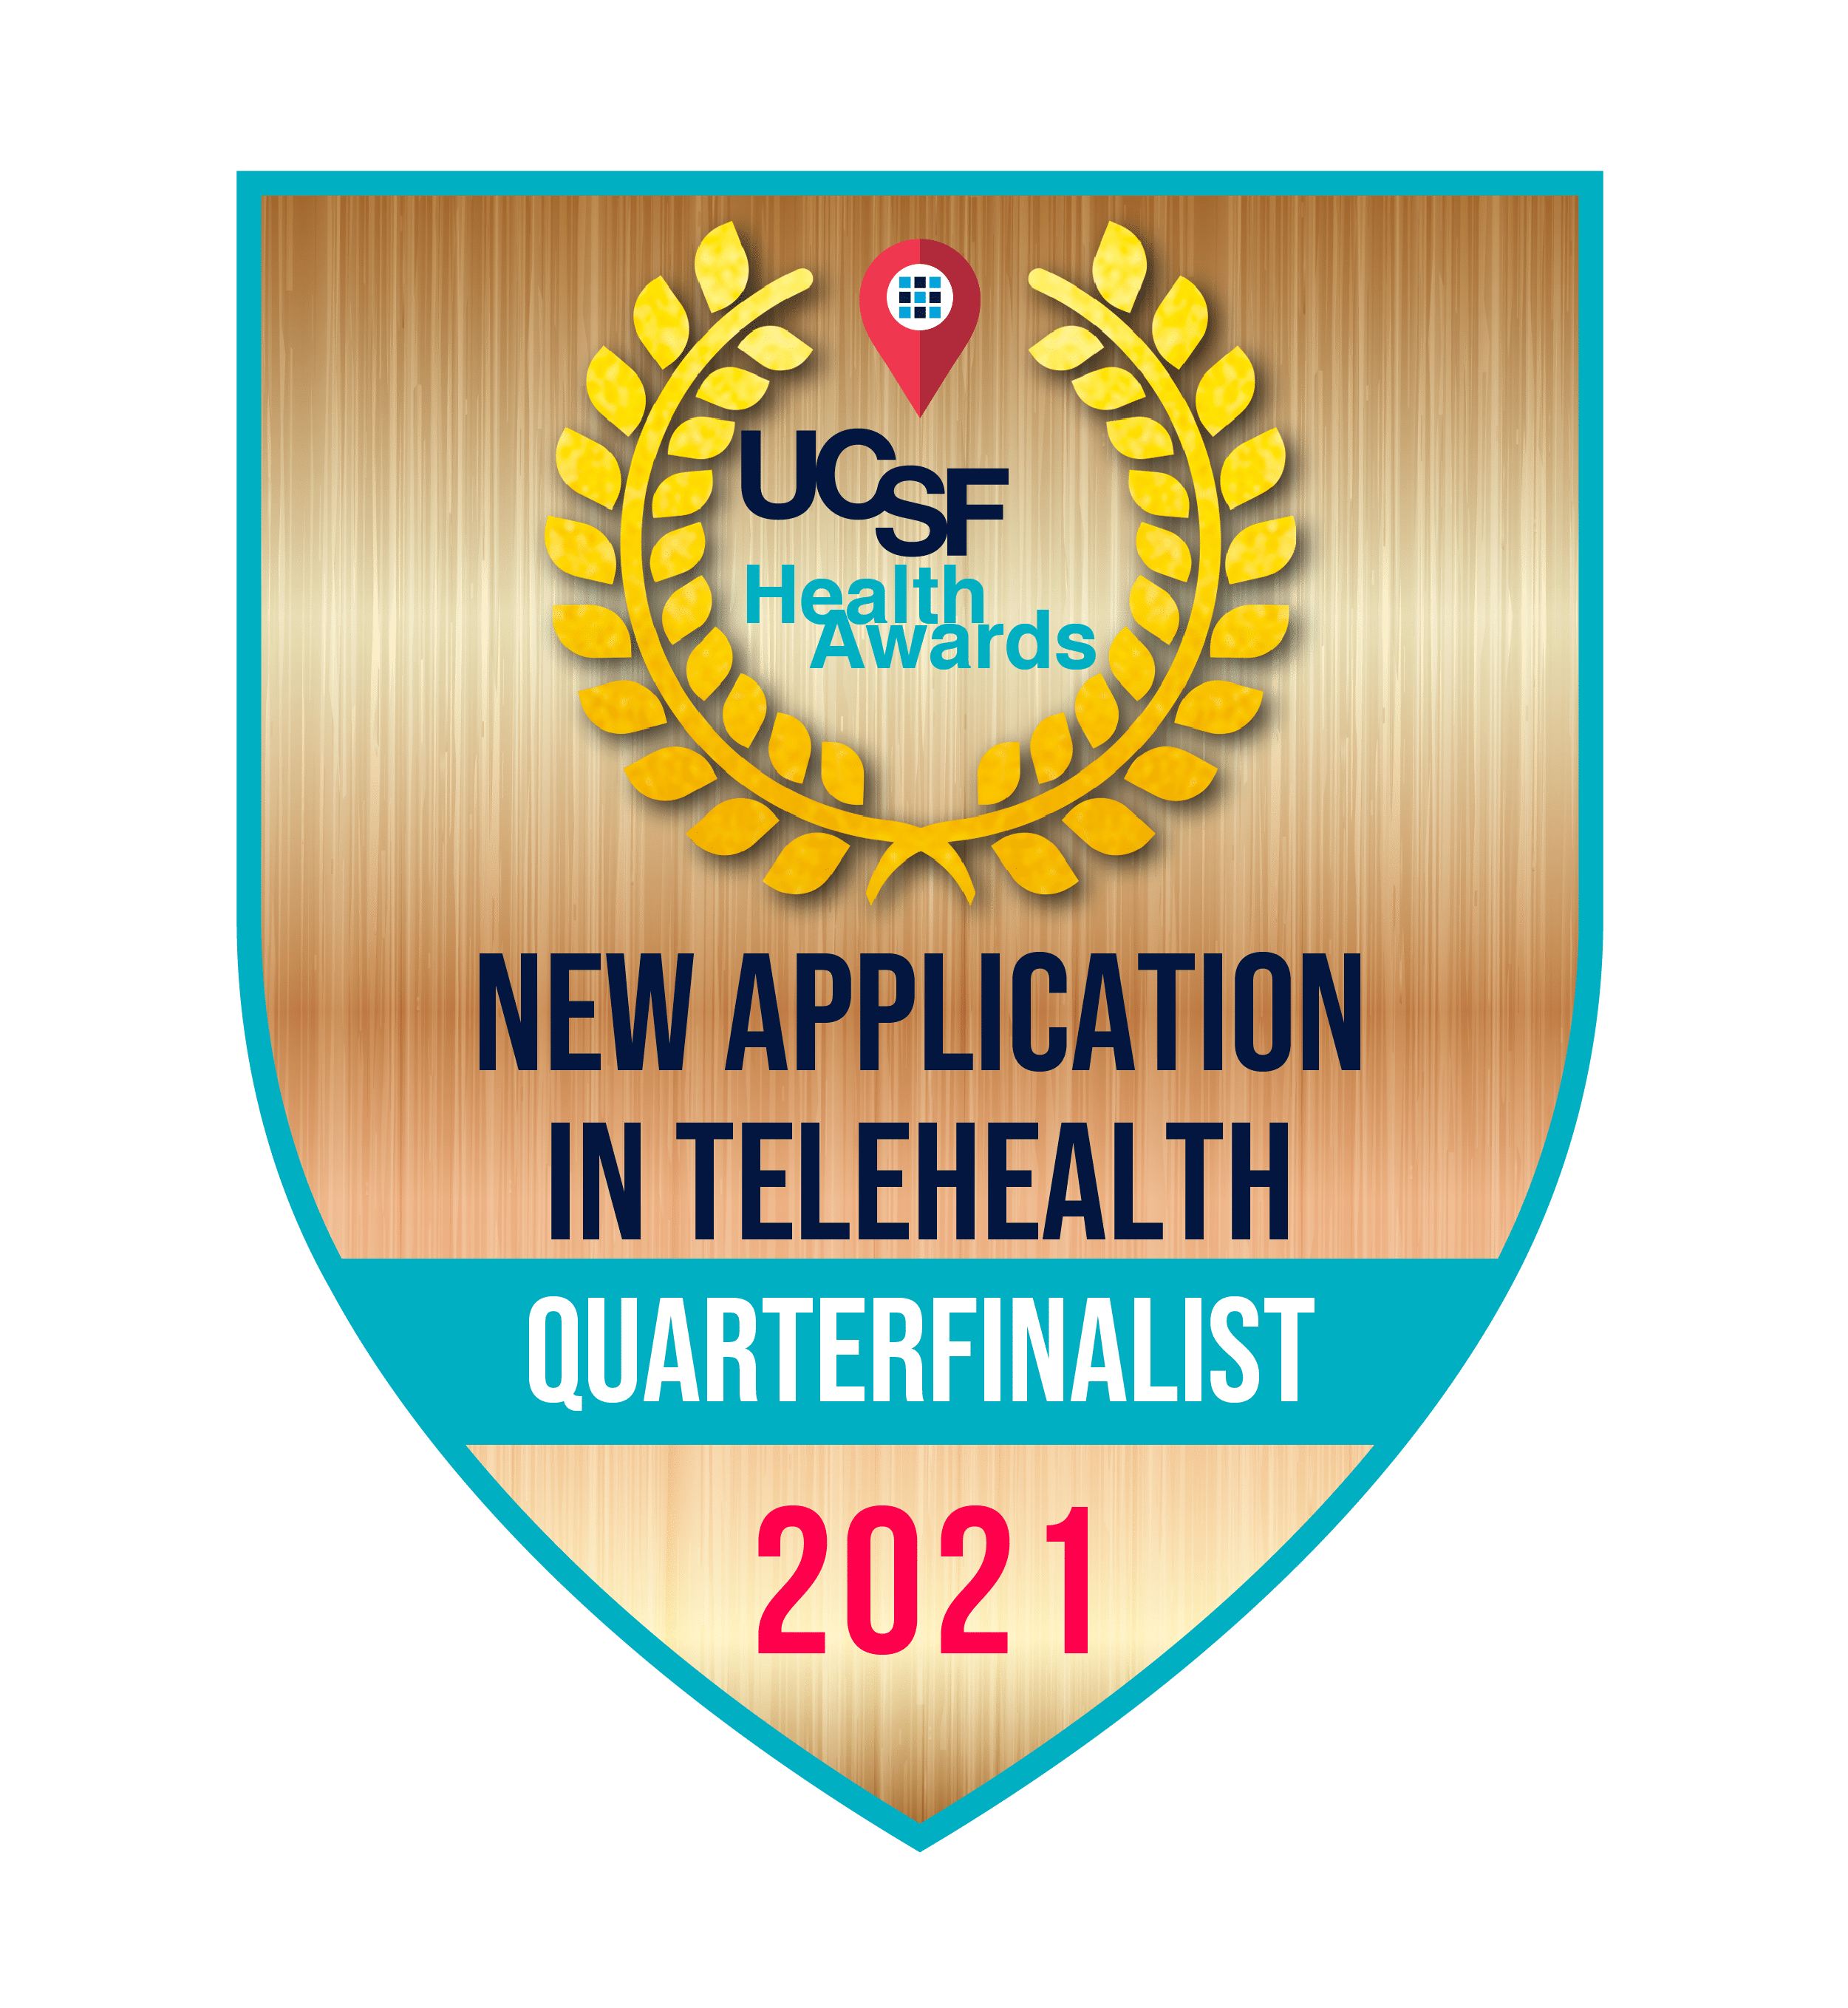 2021 UCSF Health Award Quarterfinalist